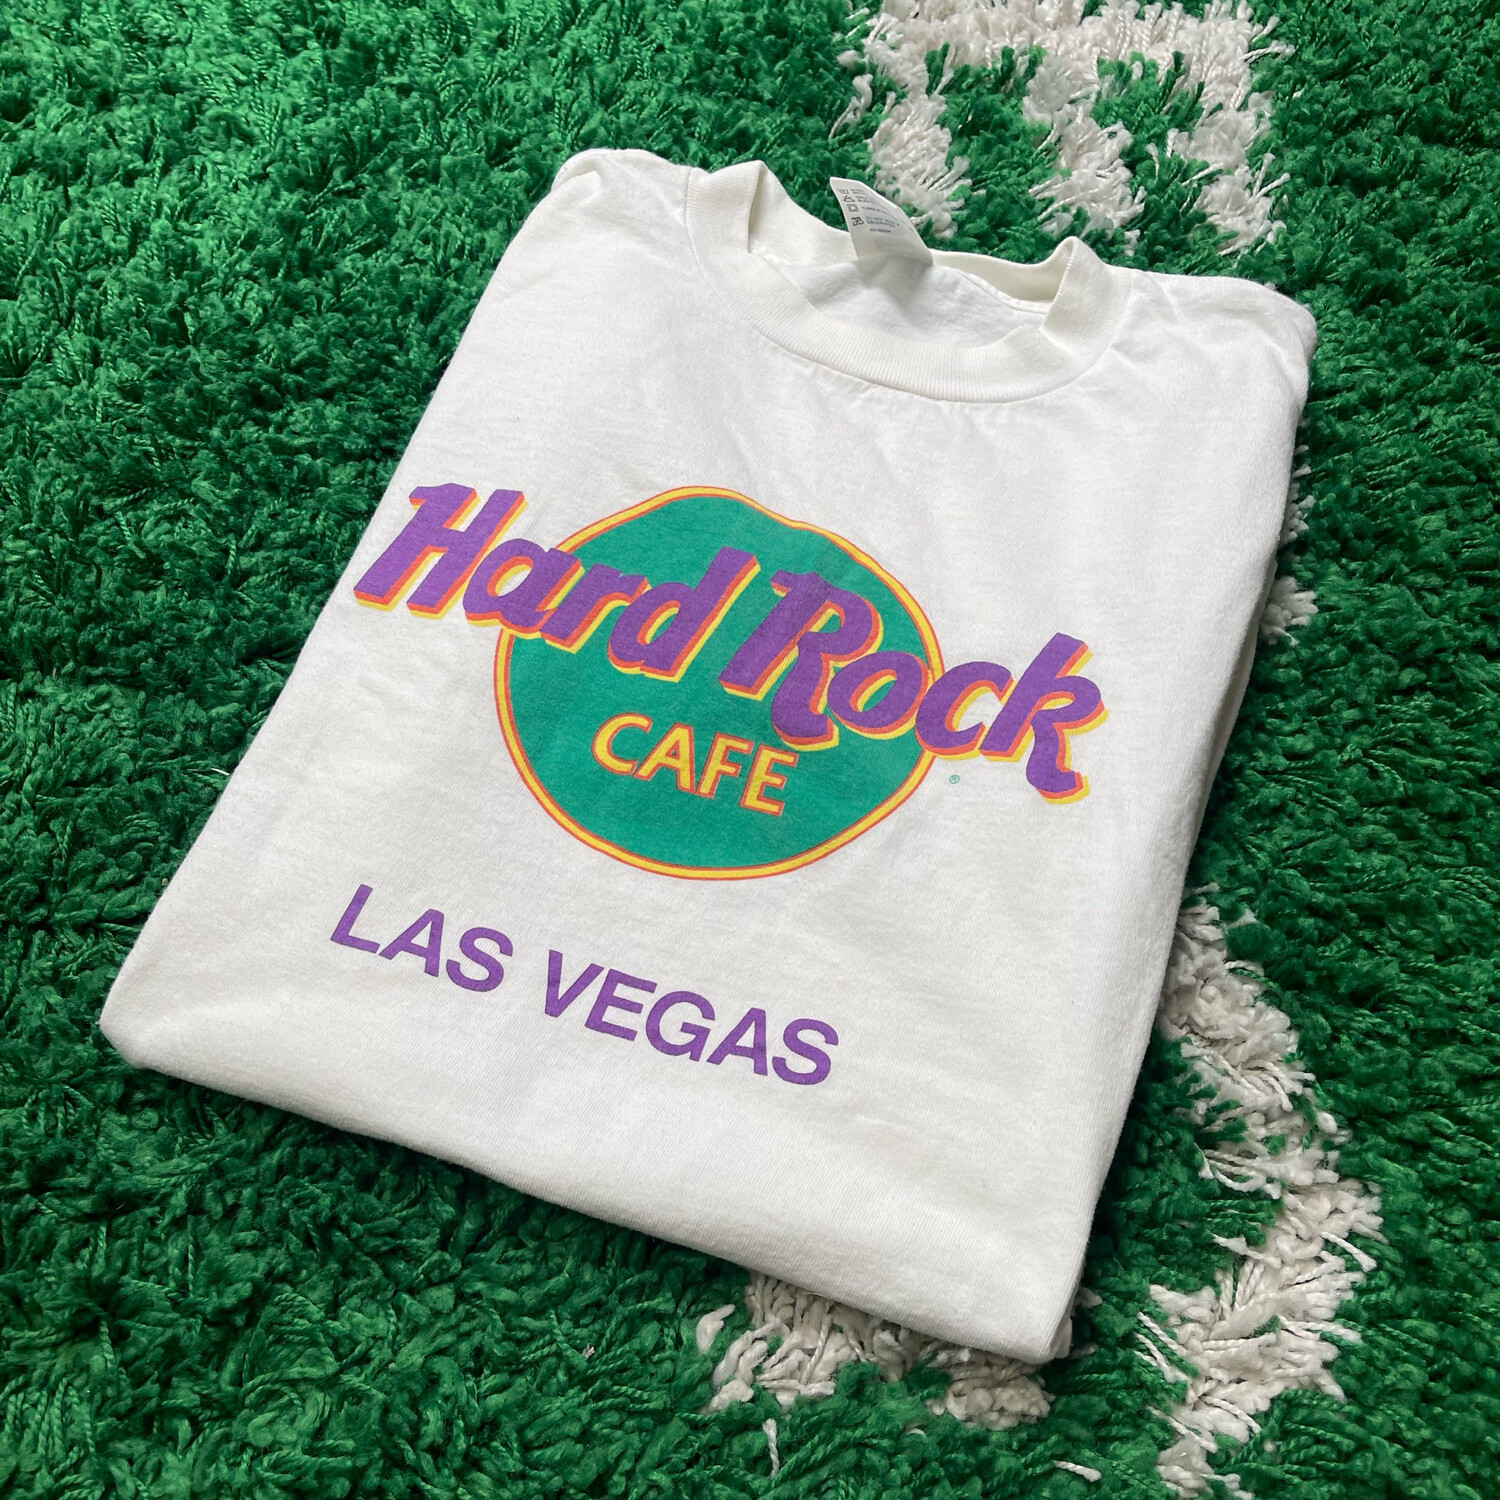 Hard Rock Cafe Las Vegas Tee Size Medium